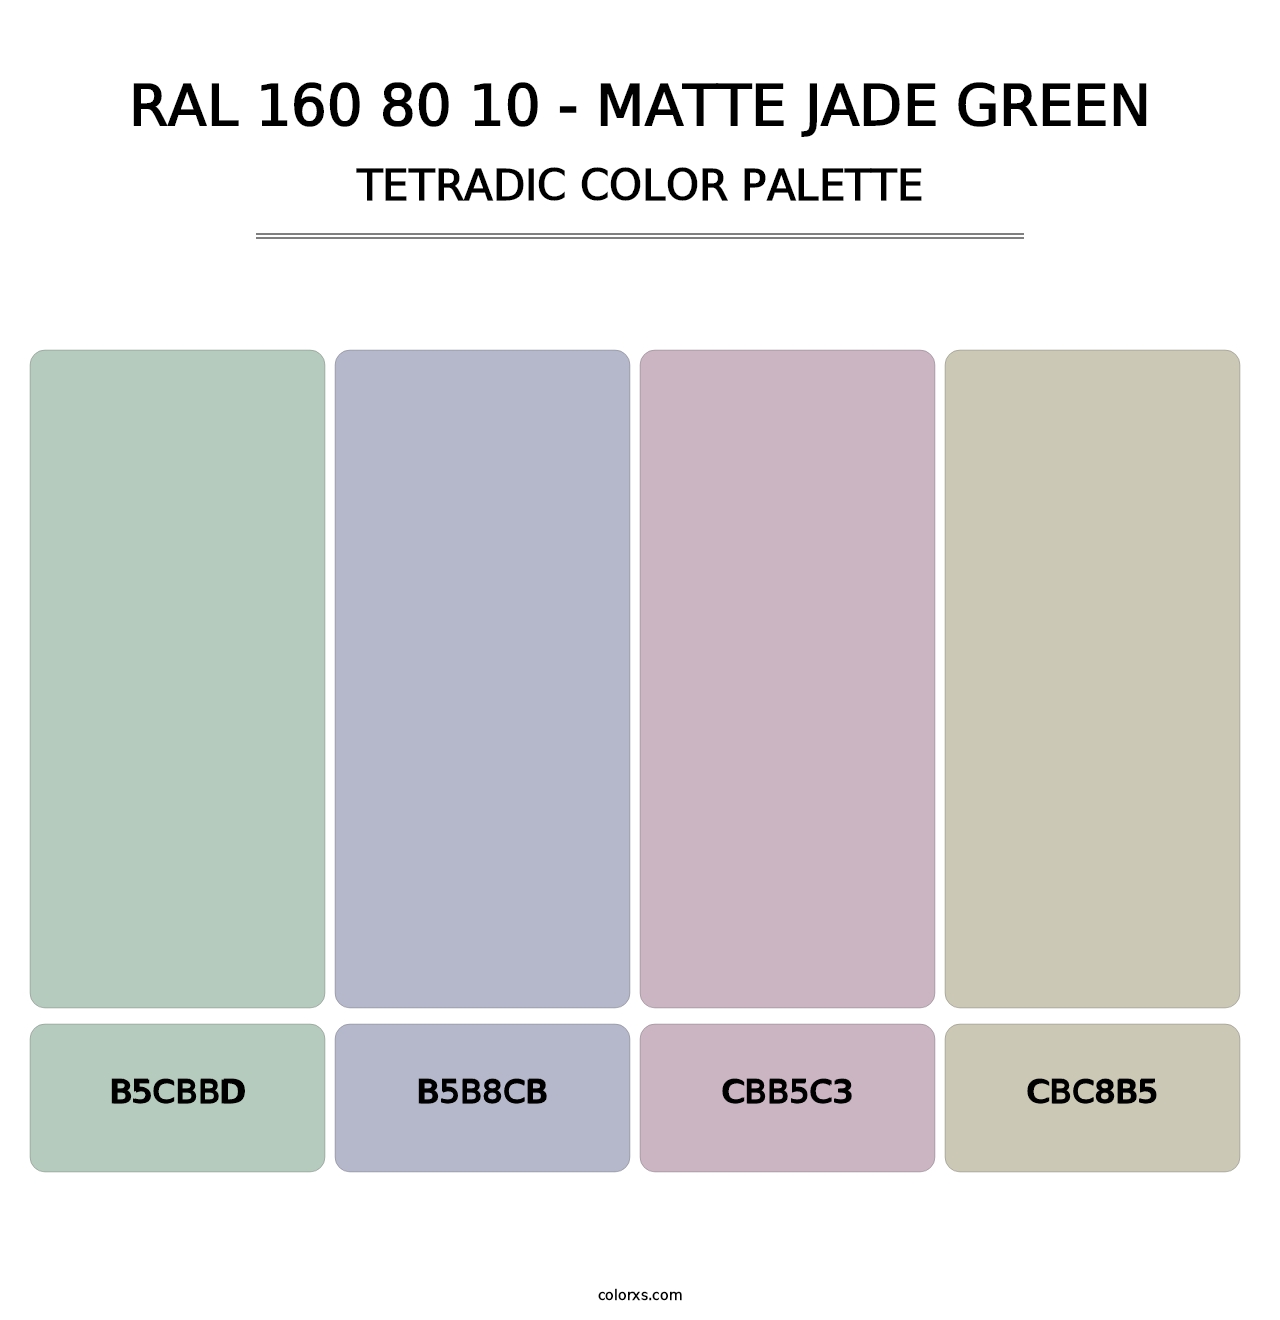 RAL 160 80 10 - Matte Jade Green - Tetradic Color Palette